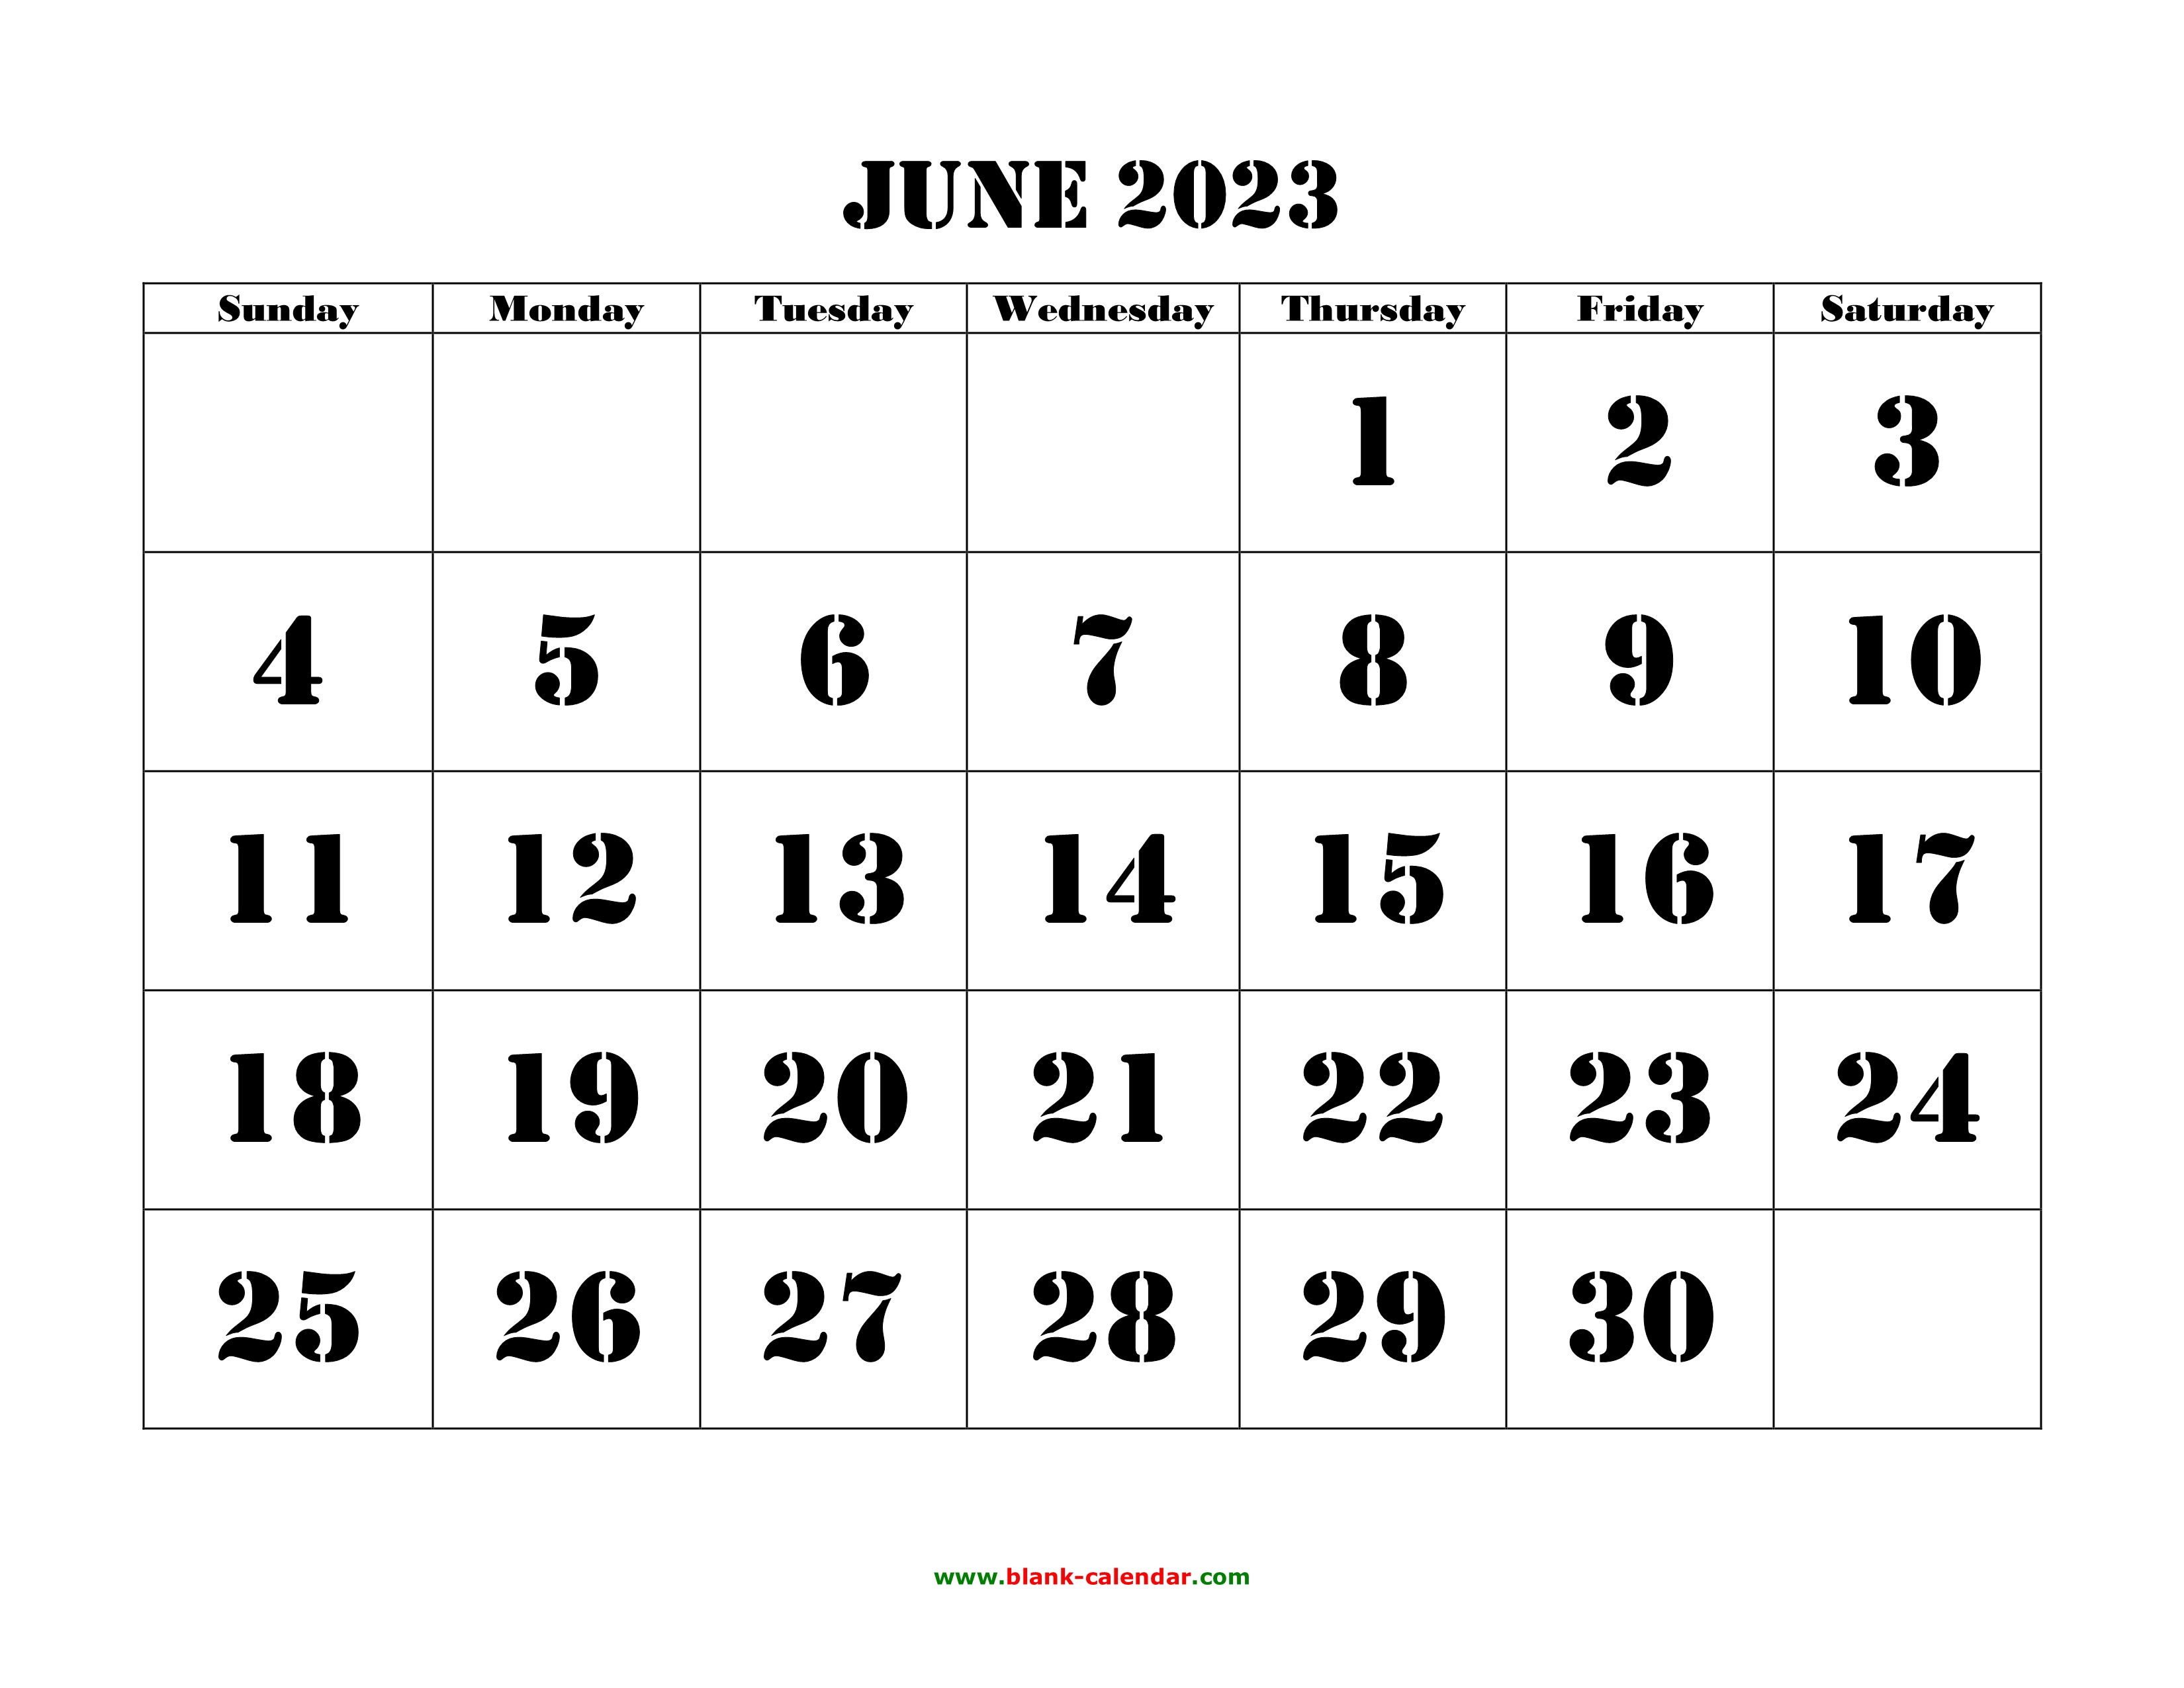 large-july-2023-calendar-get-calendar-2023-update